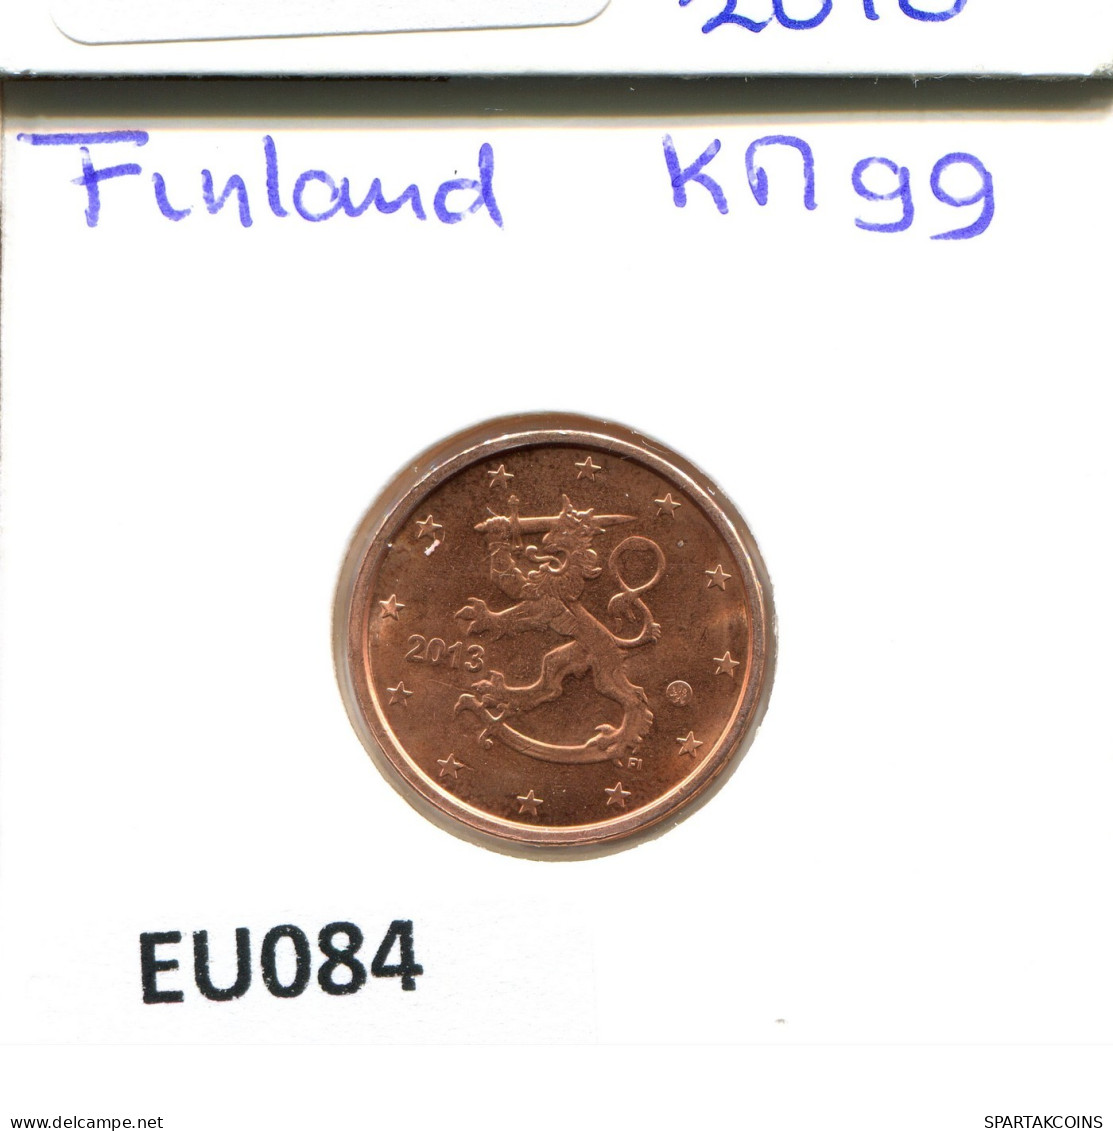 2 EURO CENTS 2013 FINLAND Coin #EU084.U.A - Finnland